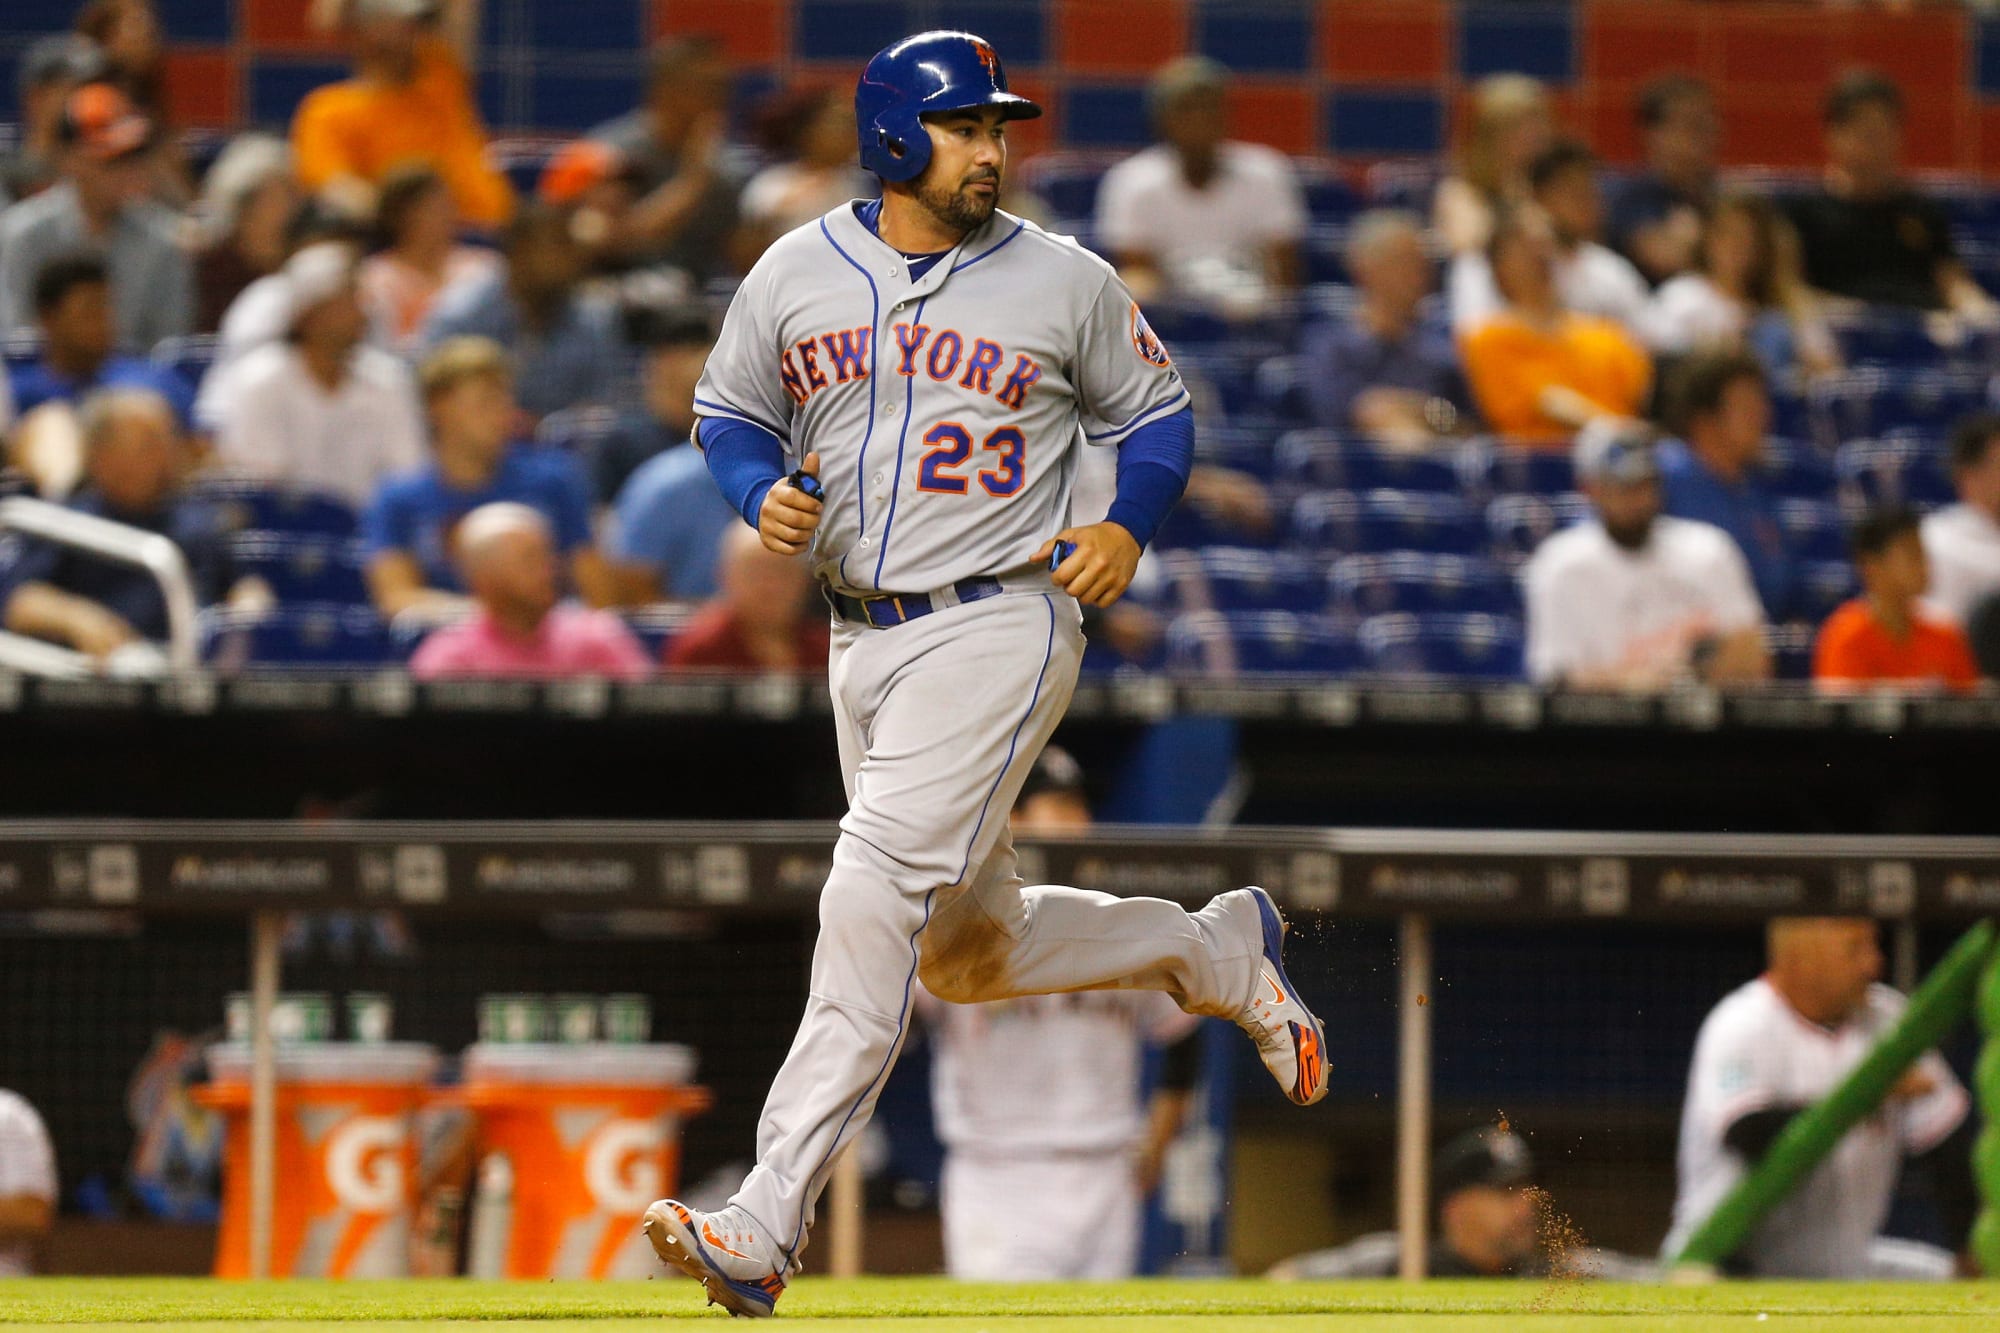 Adrian Gonzalez, New York Mets, 1B - News, Stats, Bio 